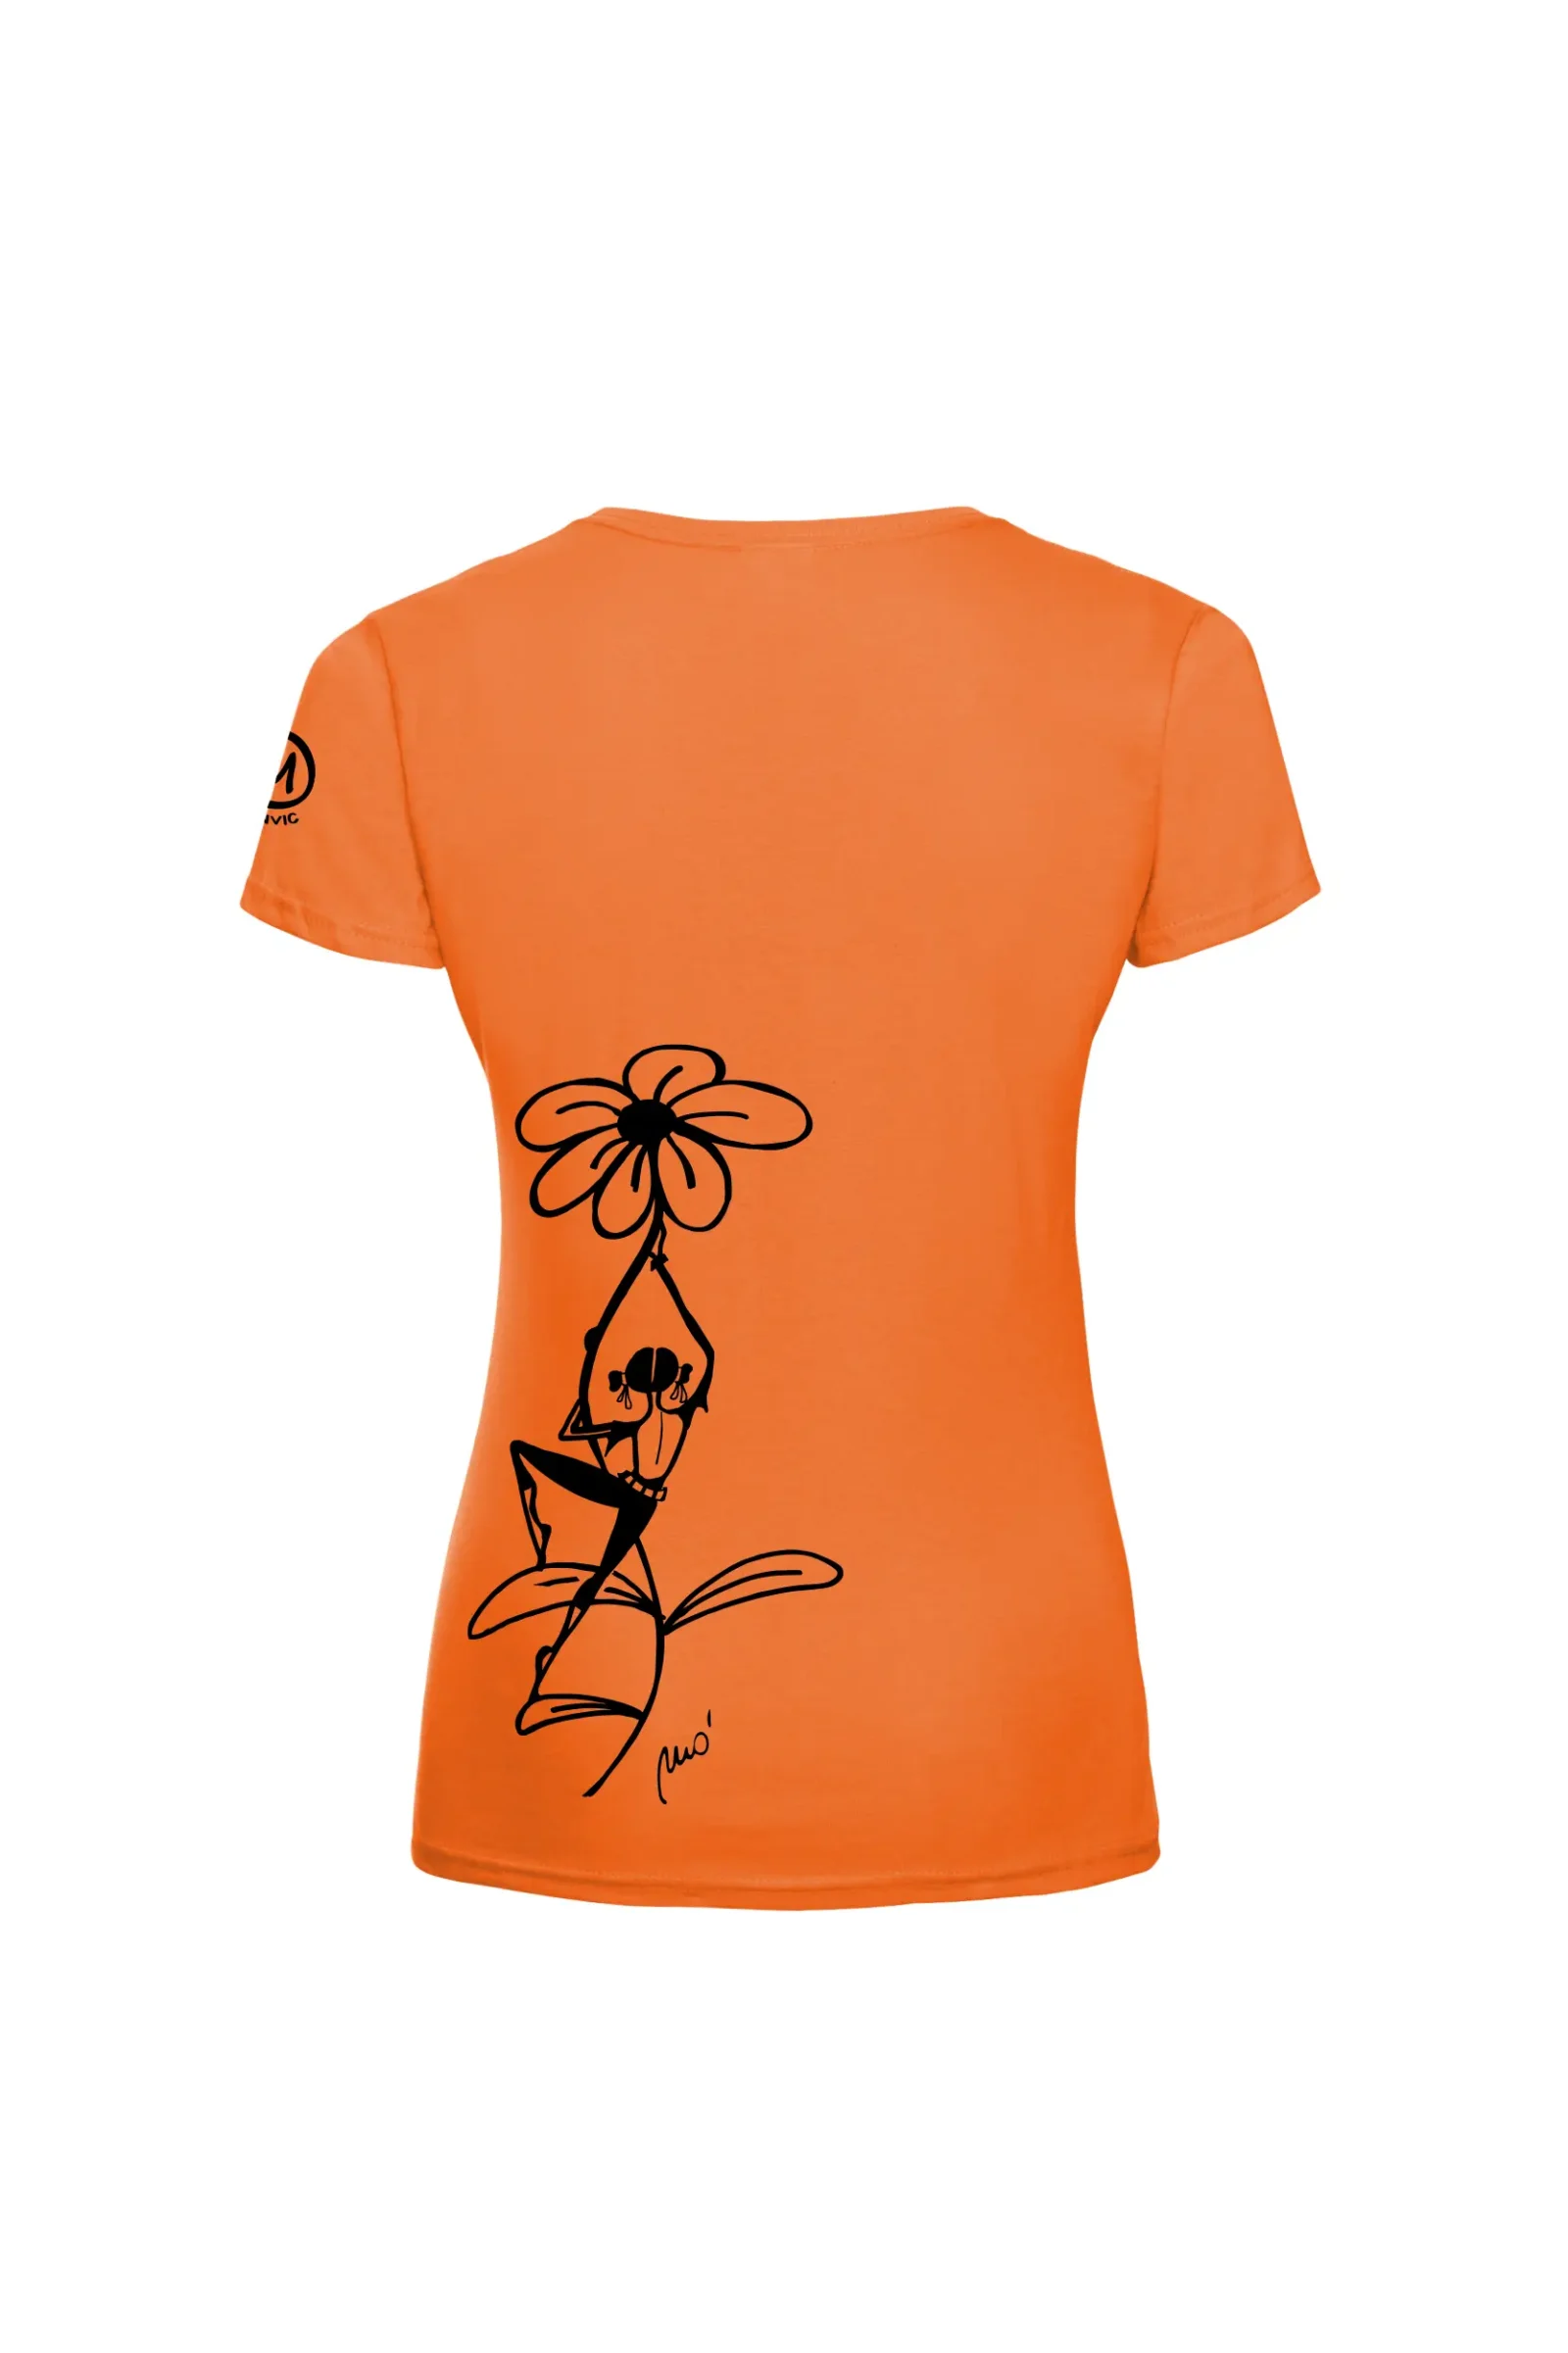 Women's climbing t-shirt - orange cotton - "Carla" SHARON MONVIC